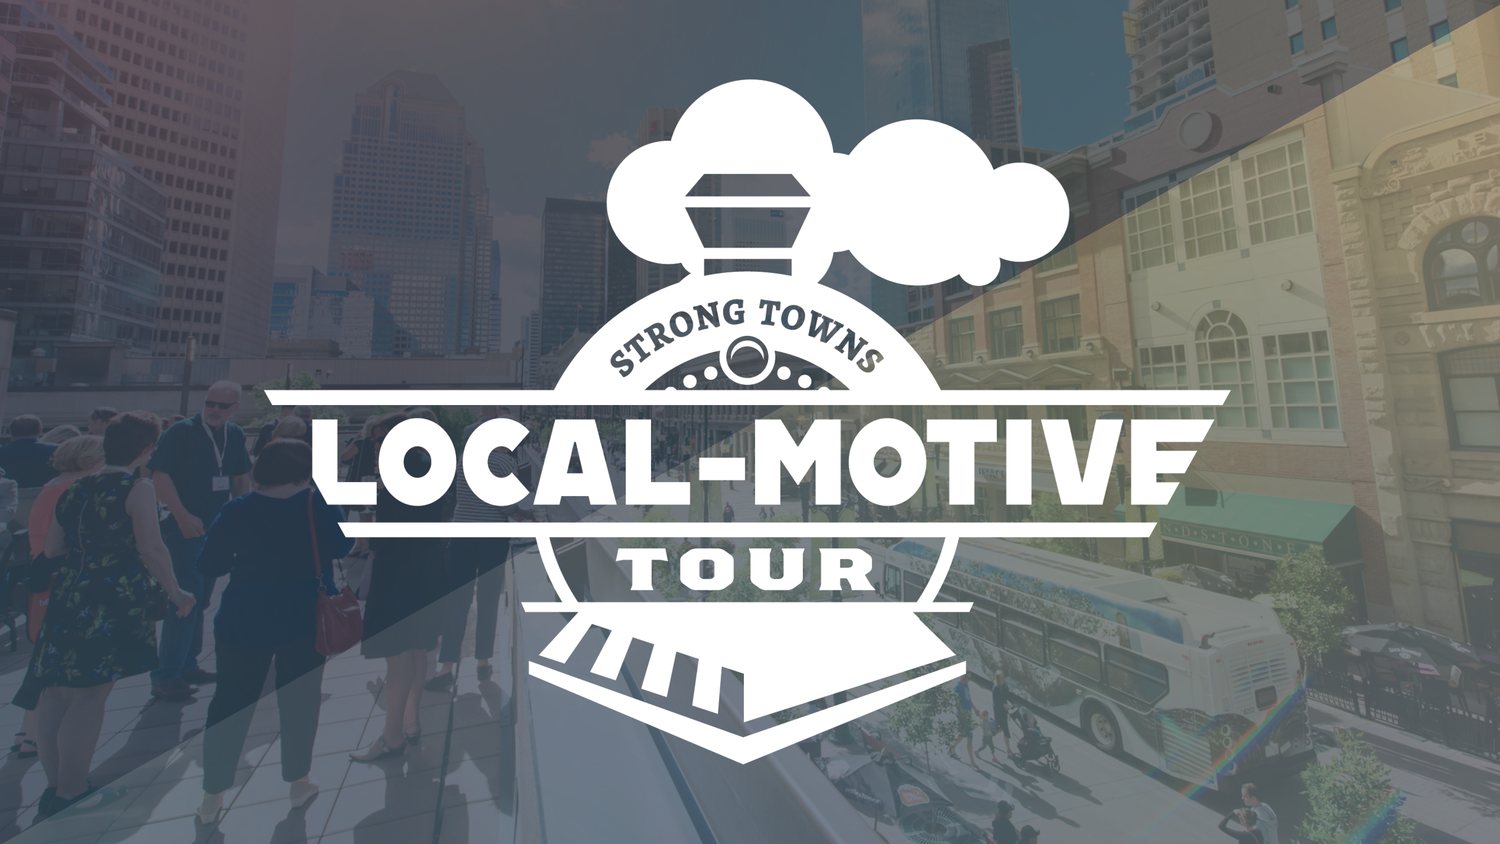 Announcing the Local-Motive Tour